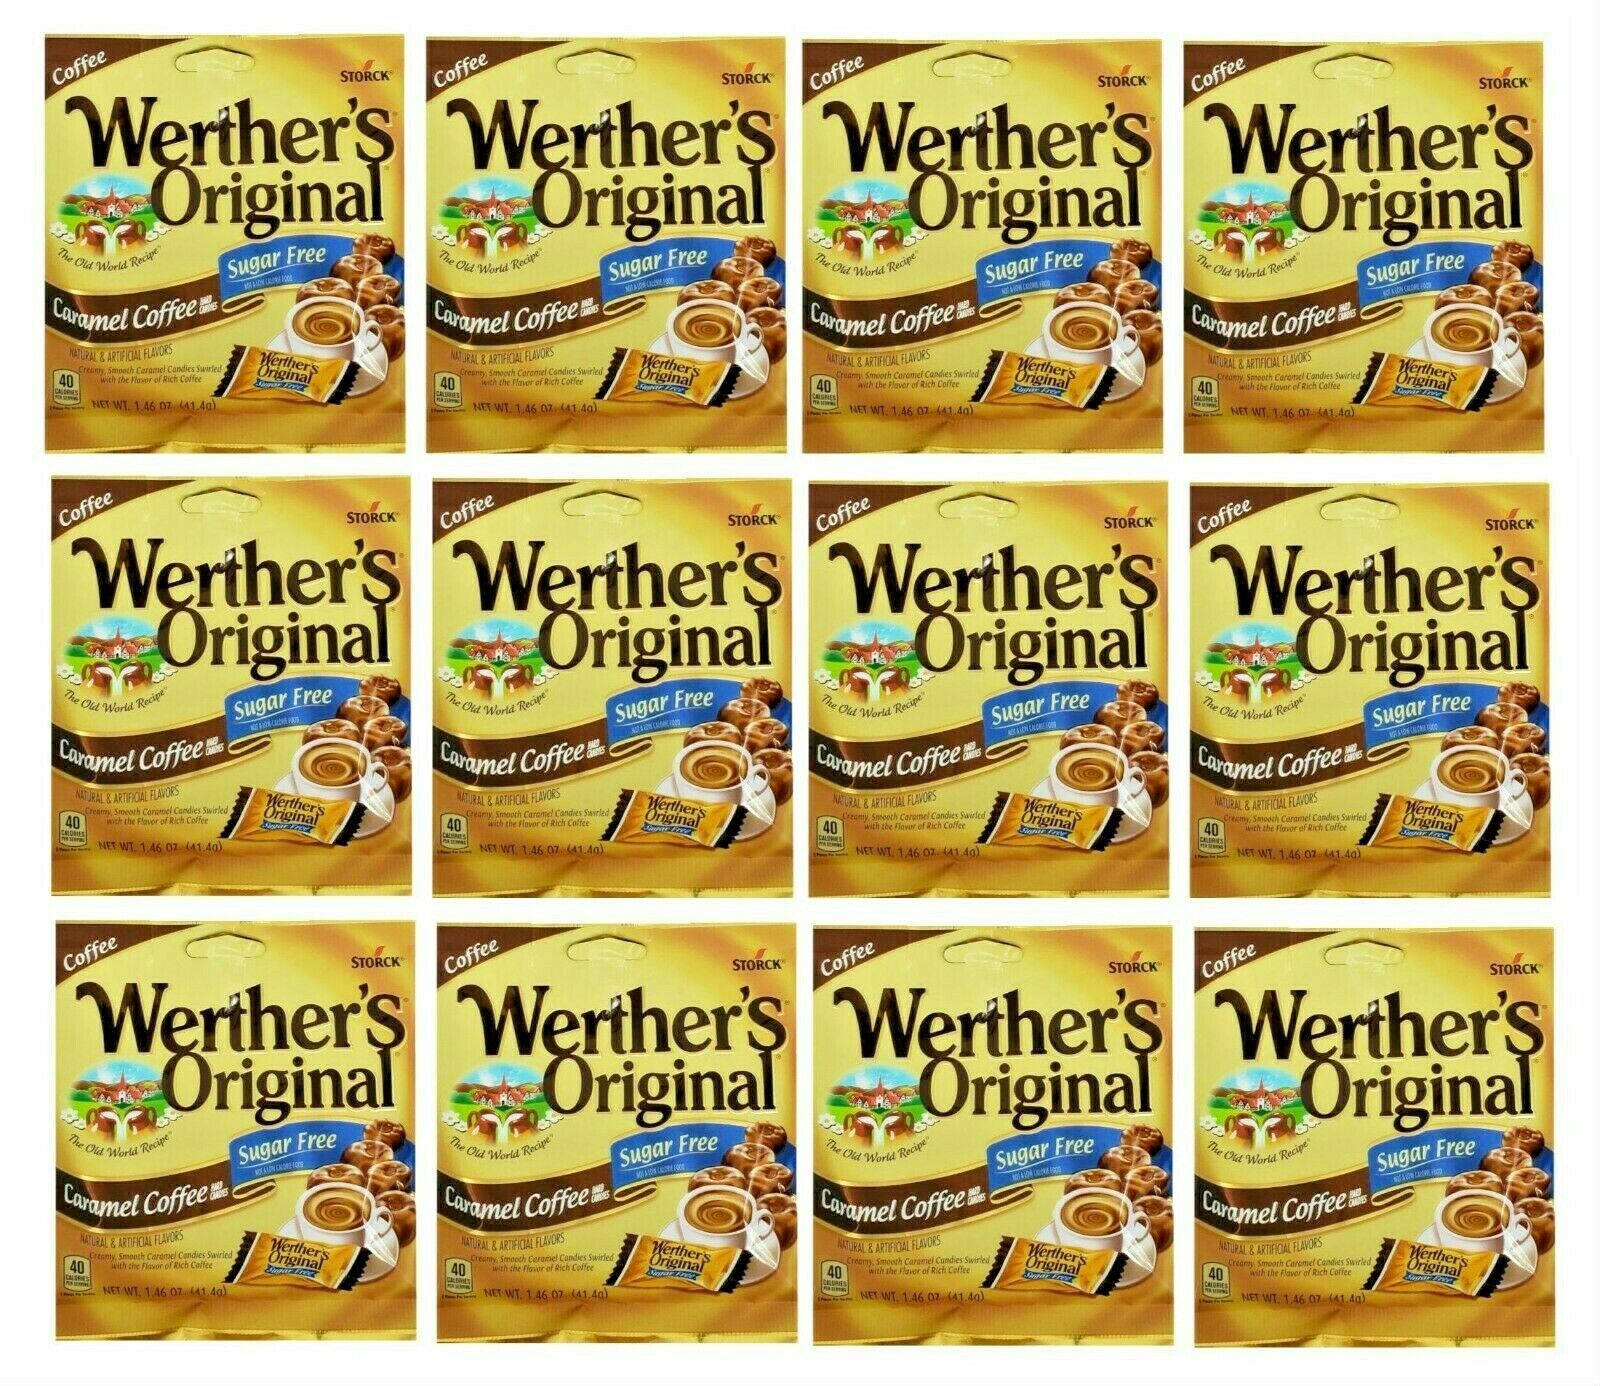 Werther's Original SUGAR FREE Candy Caramel Coffee 1.46 oz / Pack, NEW SEALED - $14.83 - $33.62